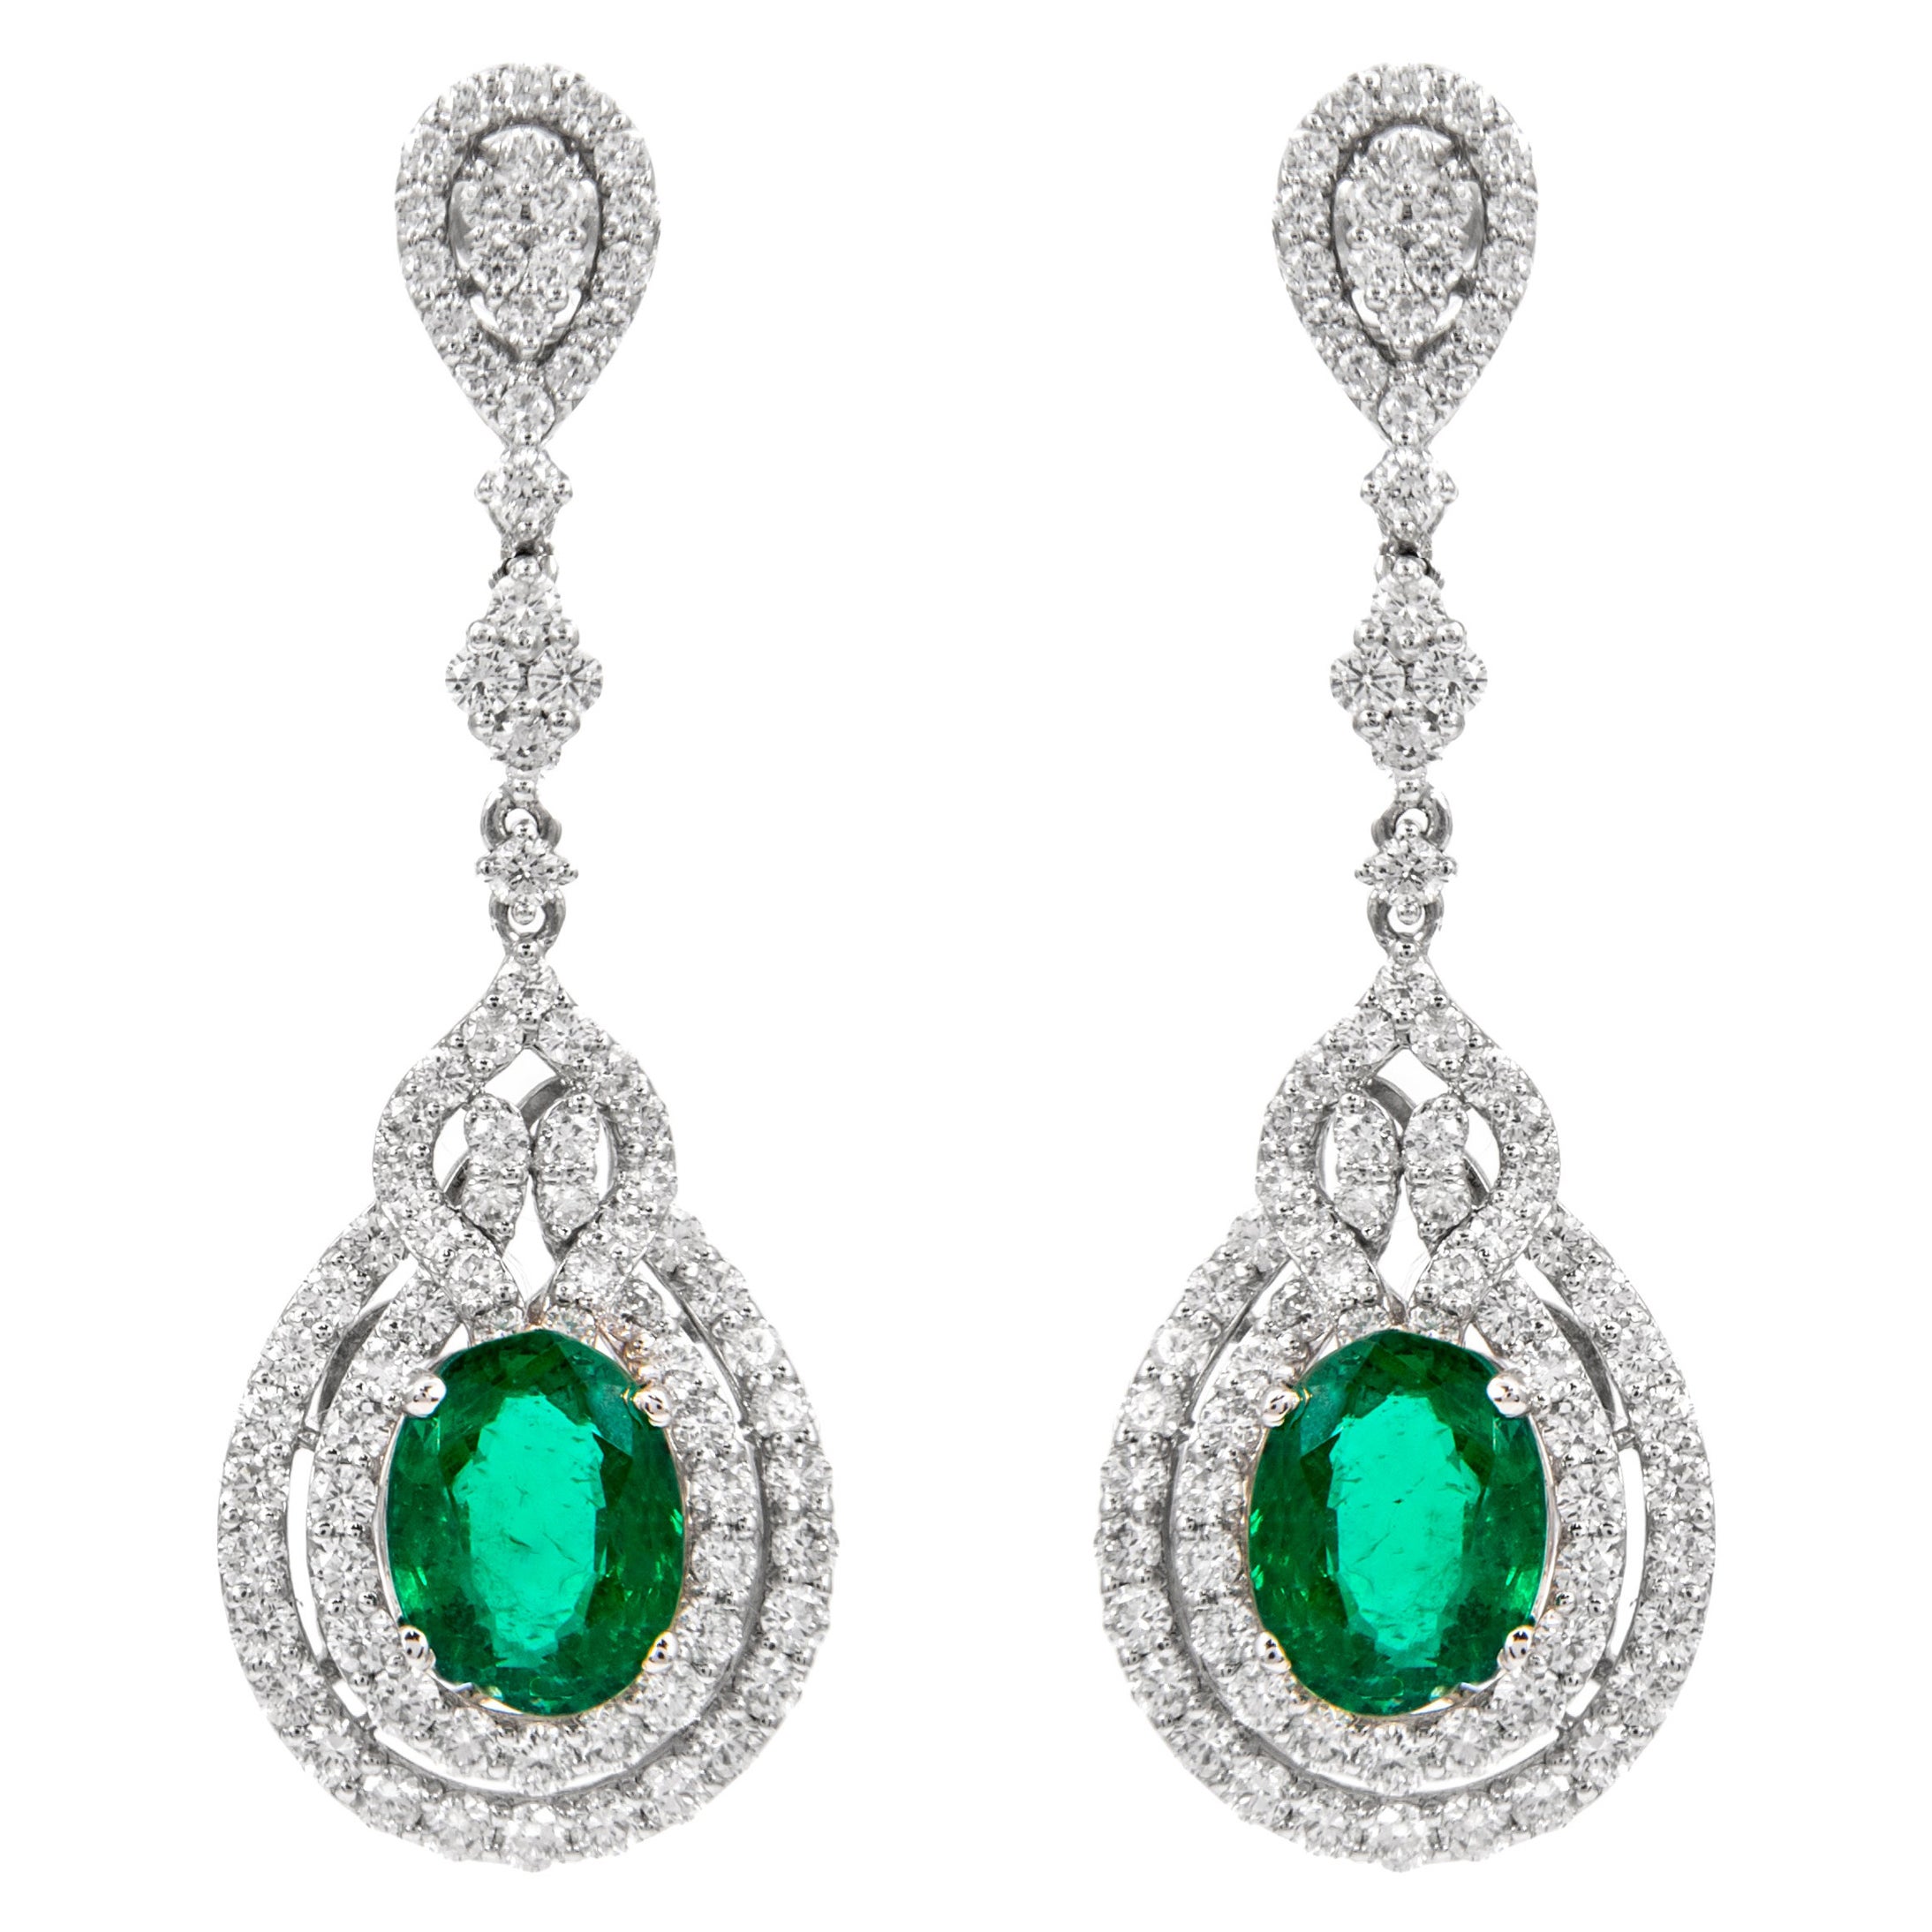 6.24ctt Oval Emeralds with Diamonds Drop Earrings 18k White Gold